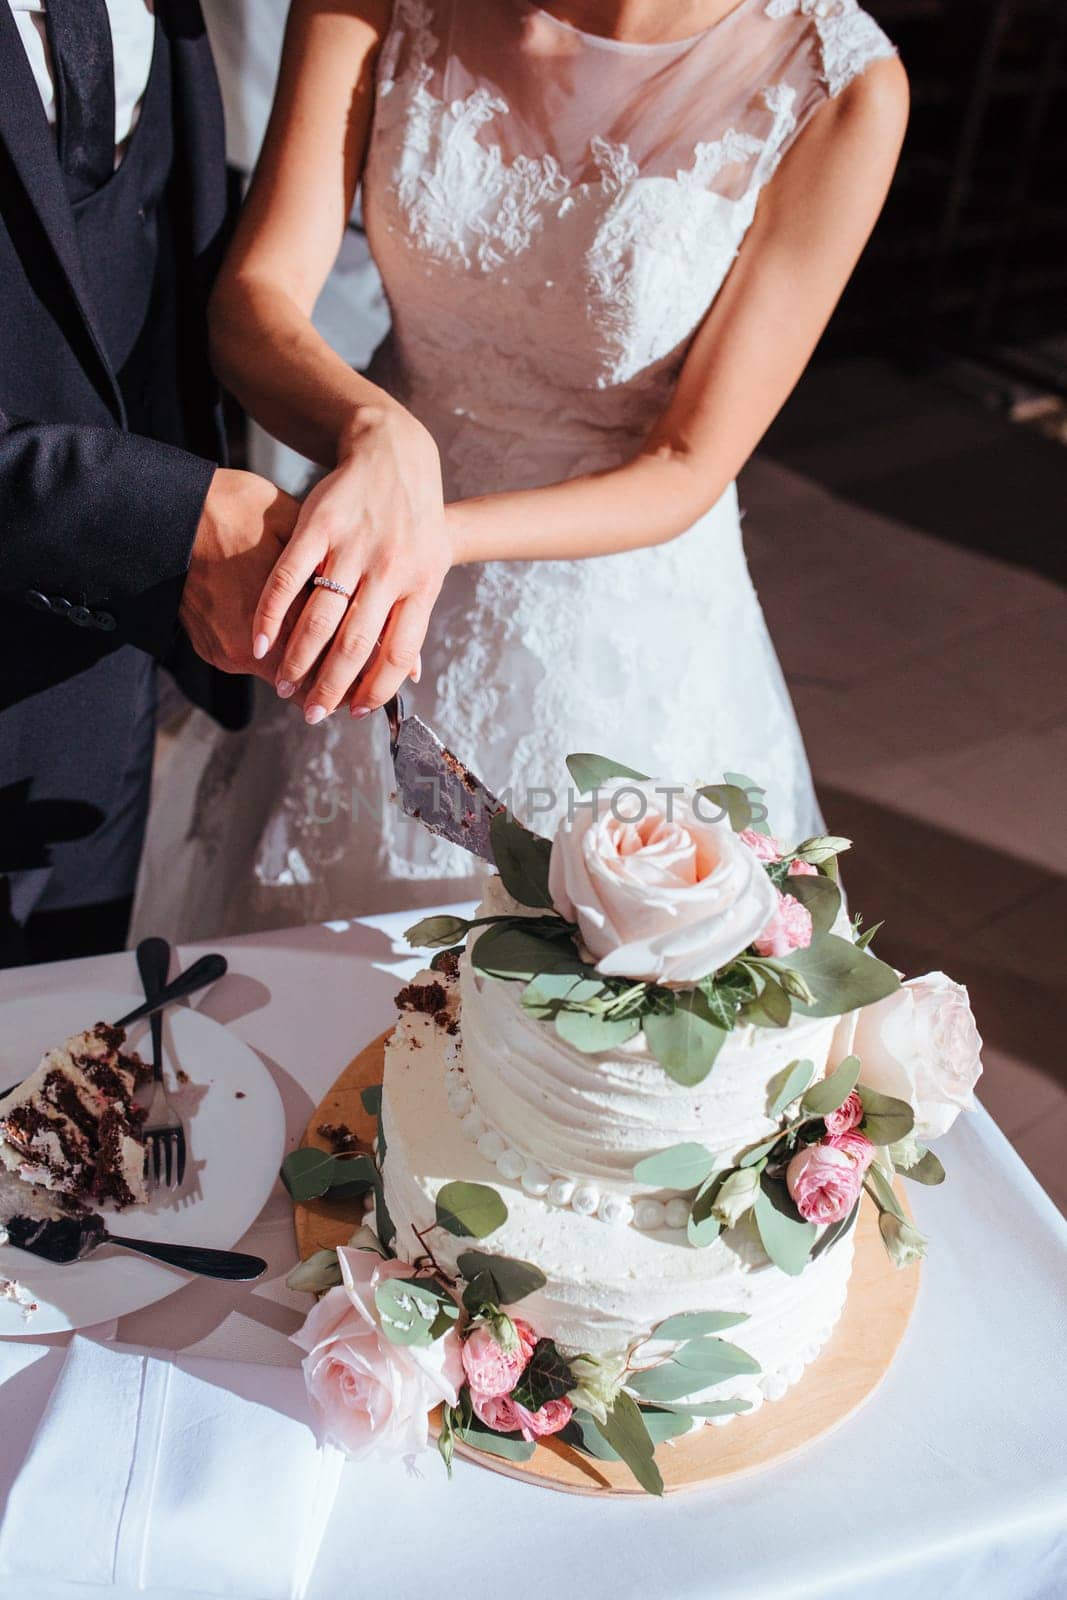 wedding. The bride and groom holding hands cut the wedding cake. Yaremche, Bukovel, Ukraine - January 10, 2022